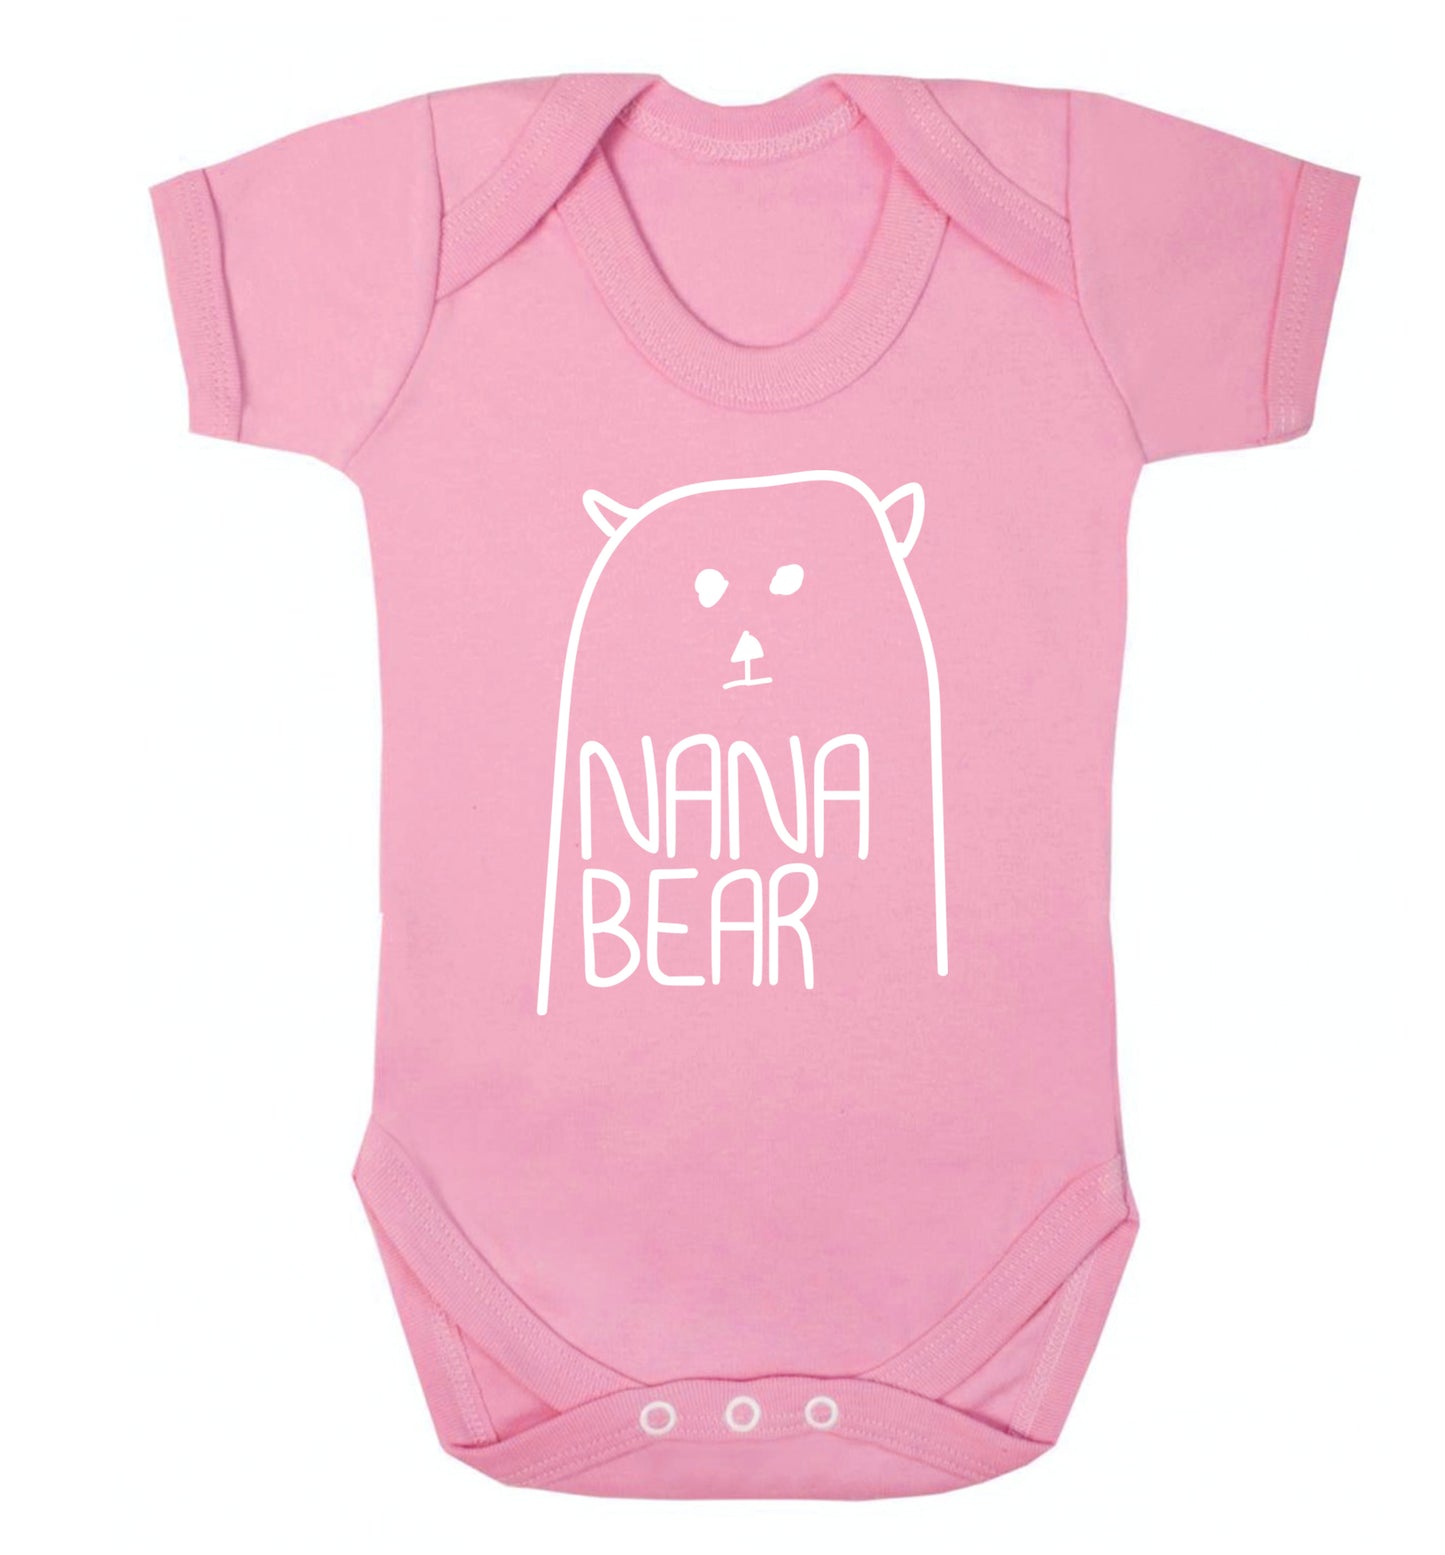 Nana bear Baby Vest pale pink 18-24 months